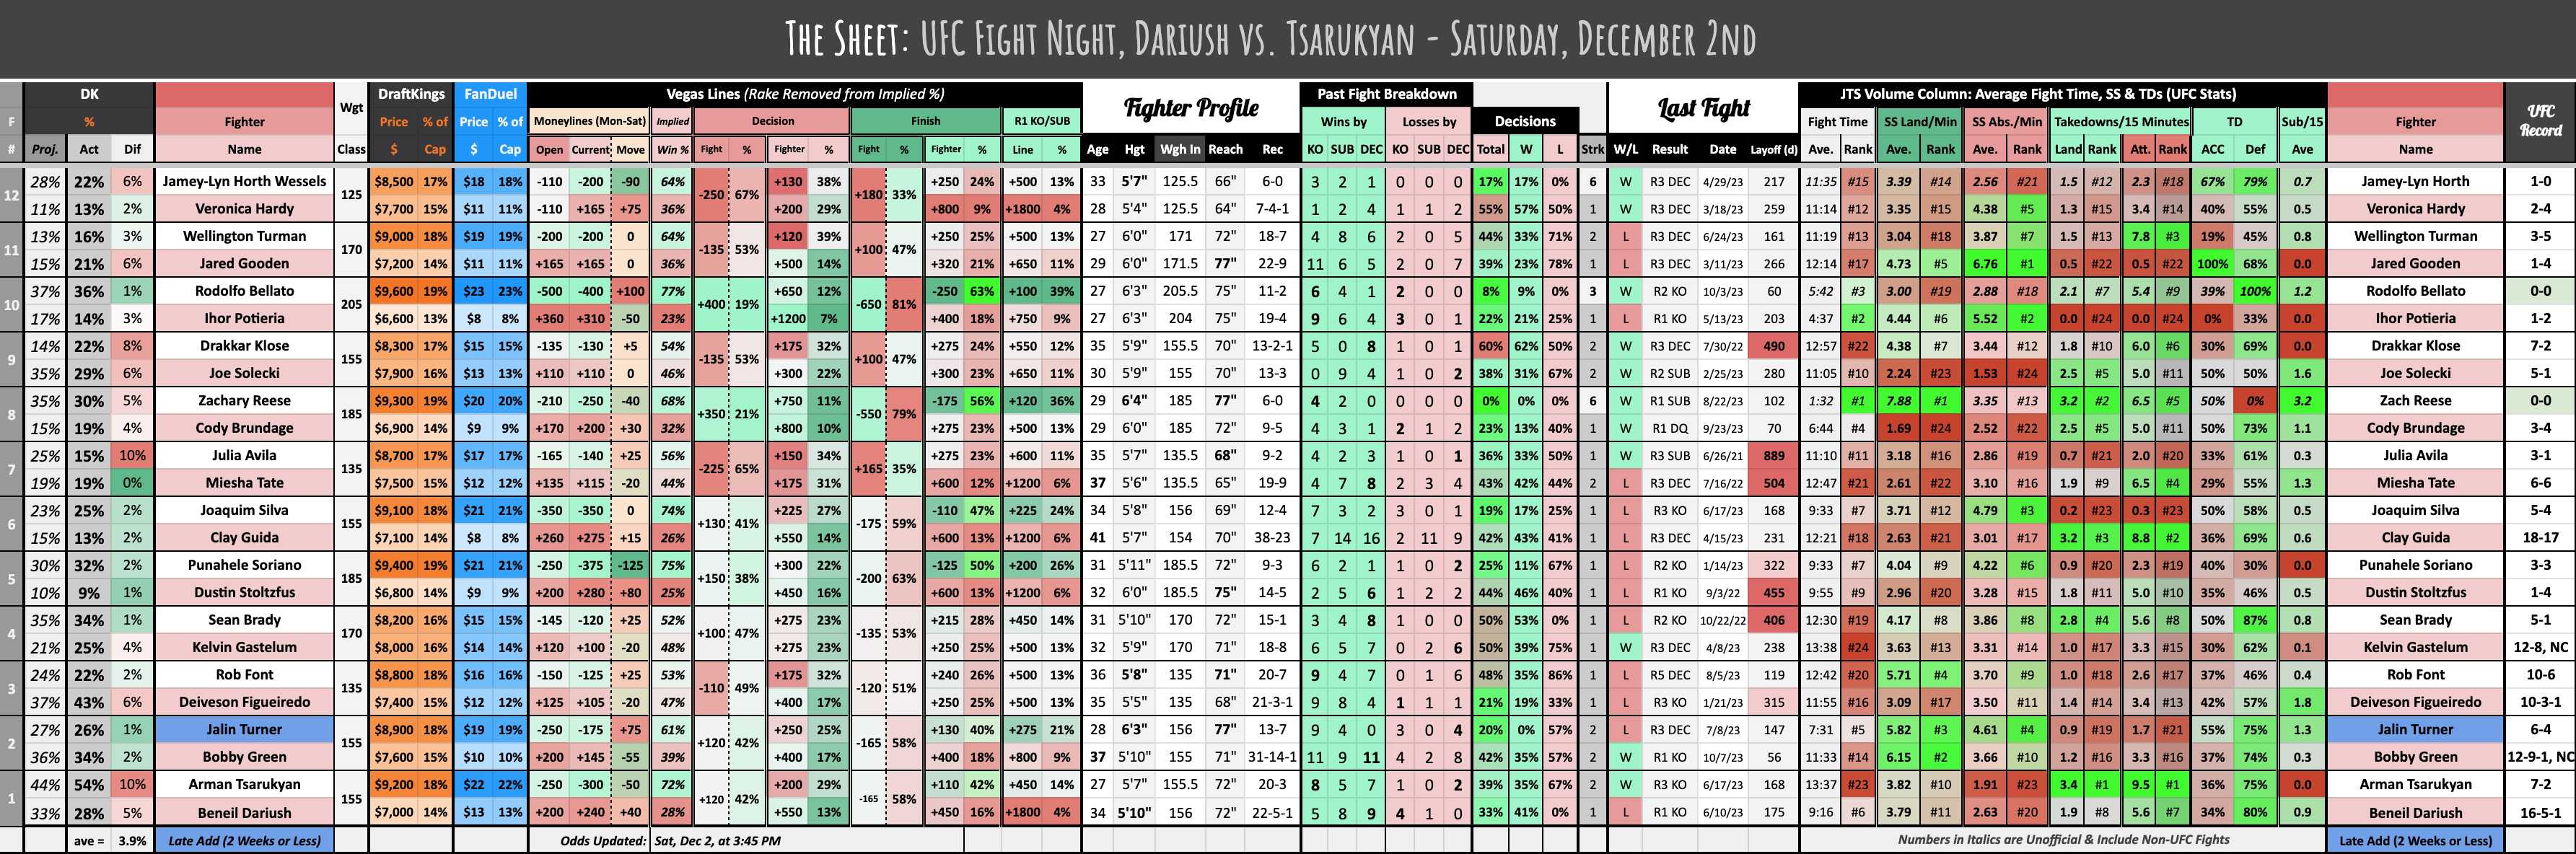 UFC Fight Night, Dariush vs. Tsarukyan - Saturday, December 2nd